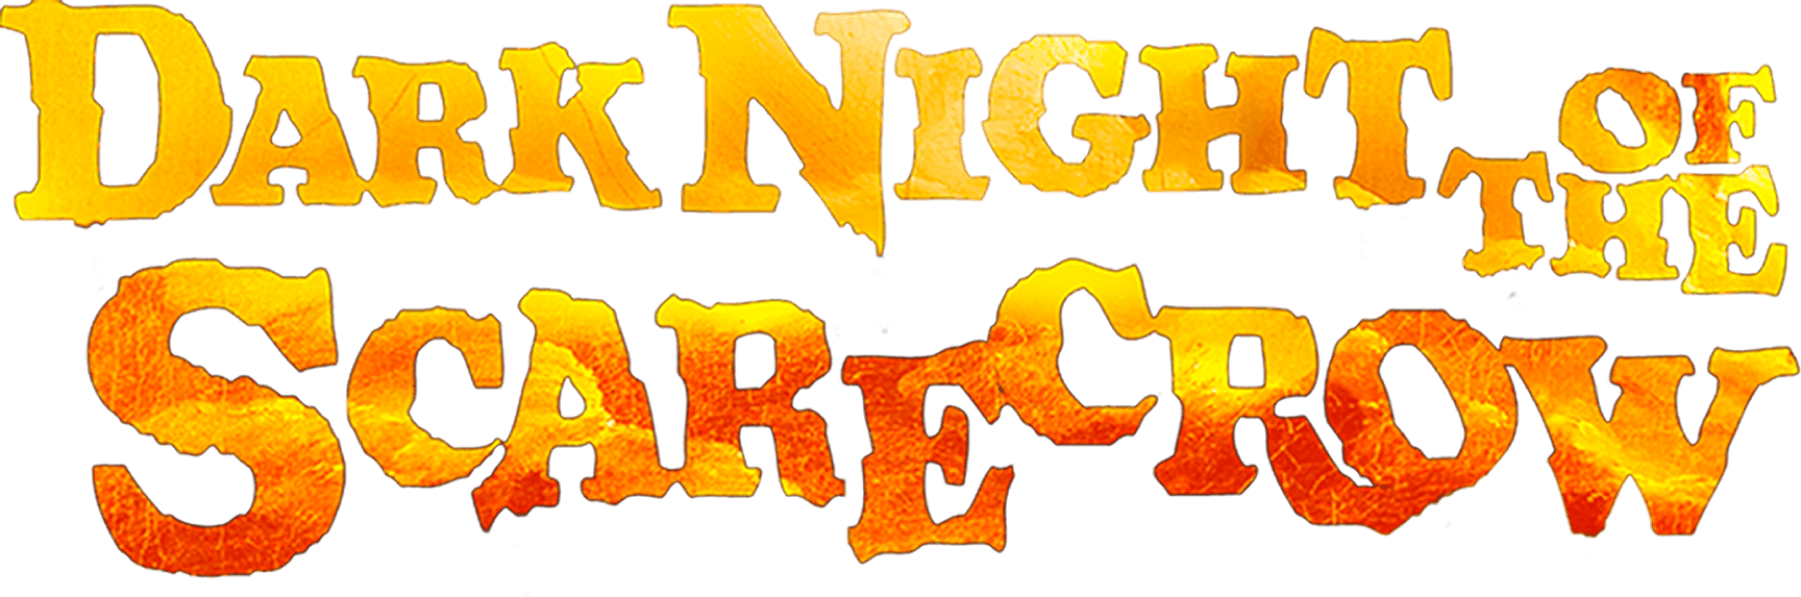 Dark Night of the Scarecrow logo